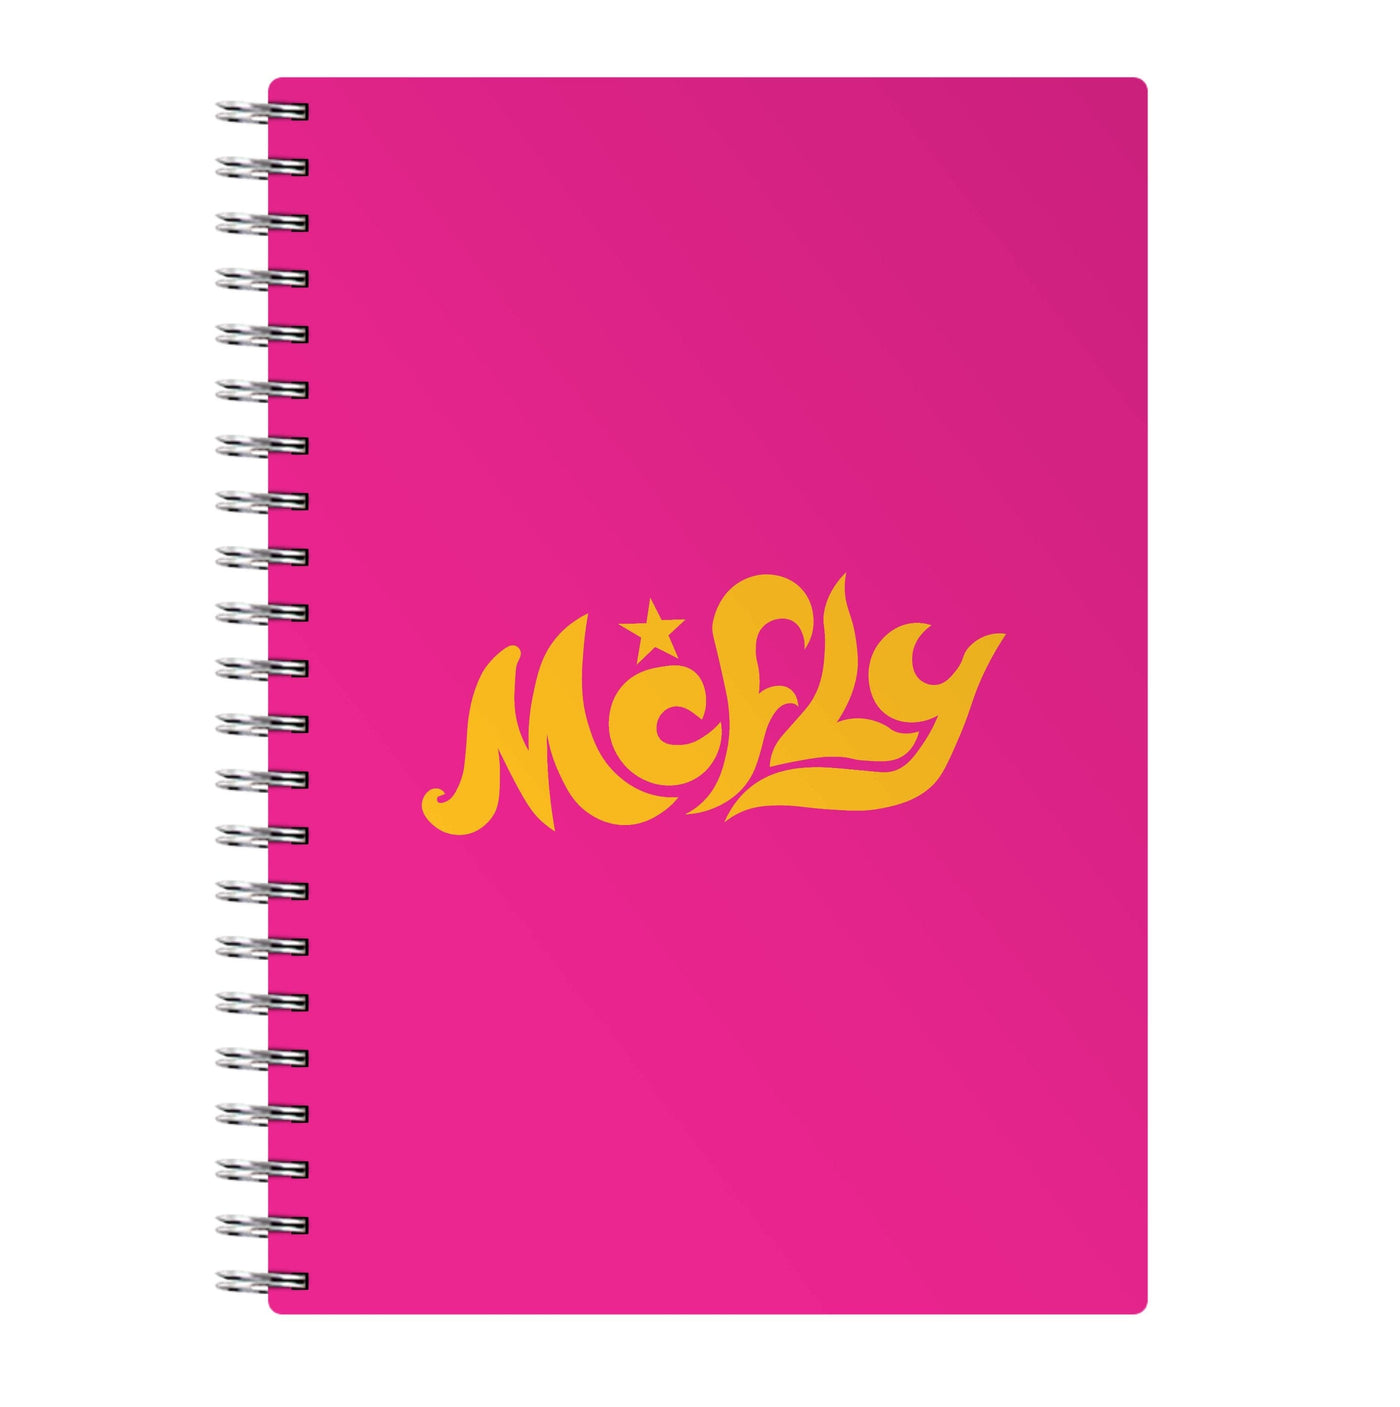 Star - McFly Notebook